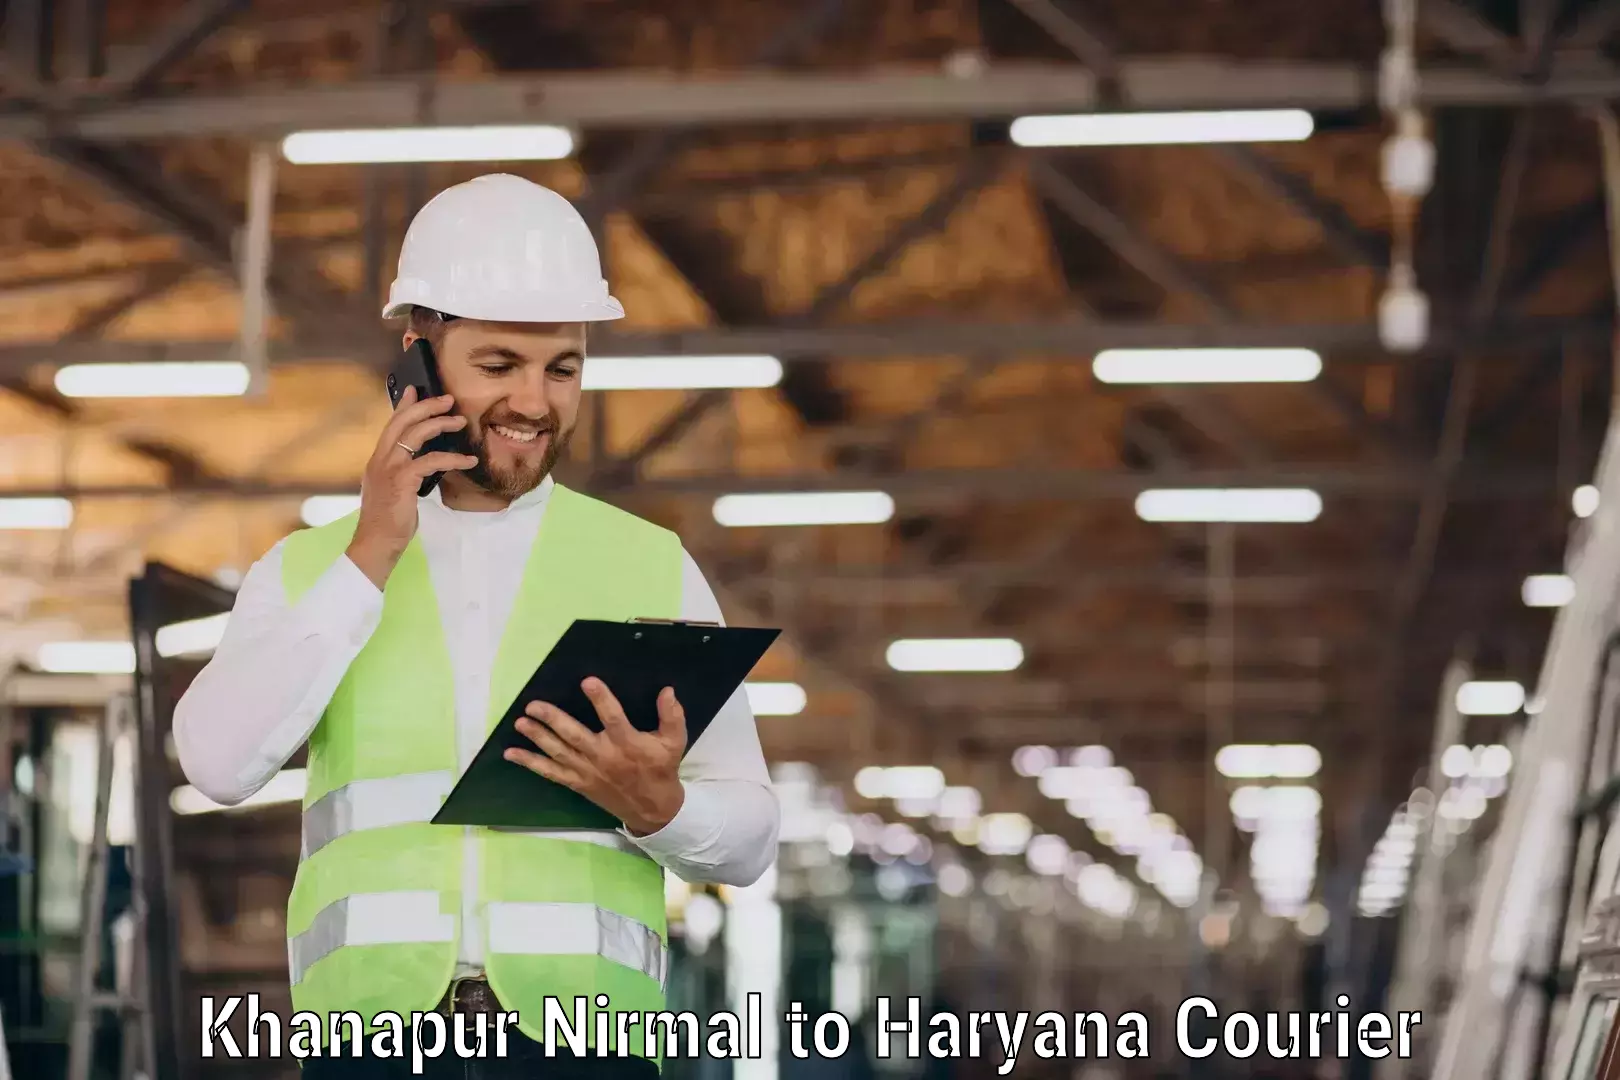 Courier service innovation Khanapur Nirmal to Bilaspur Haryana